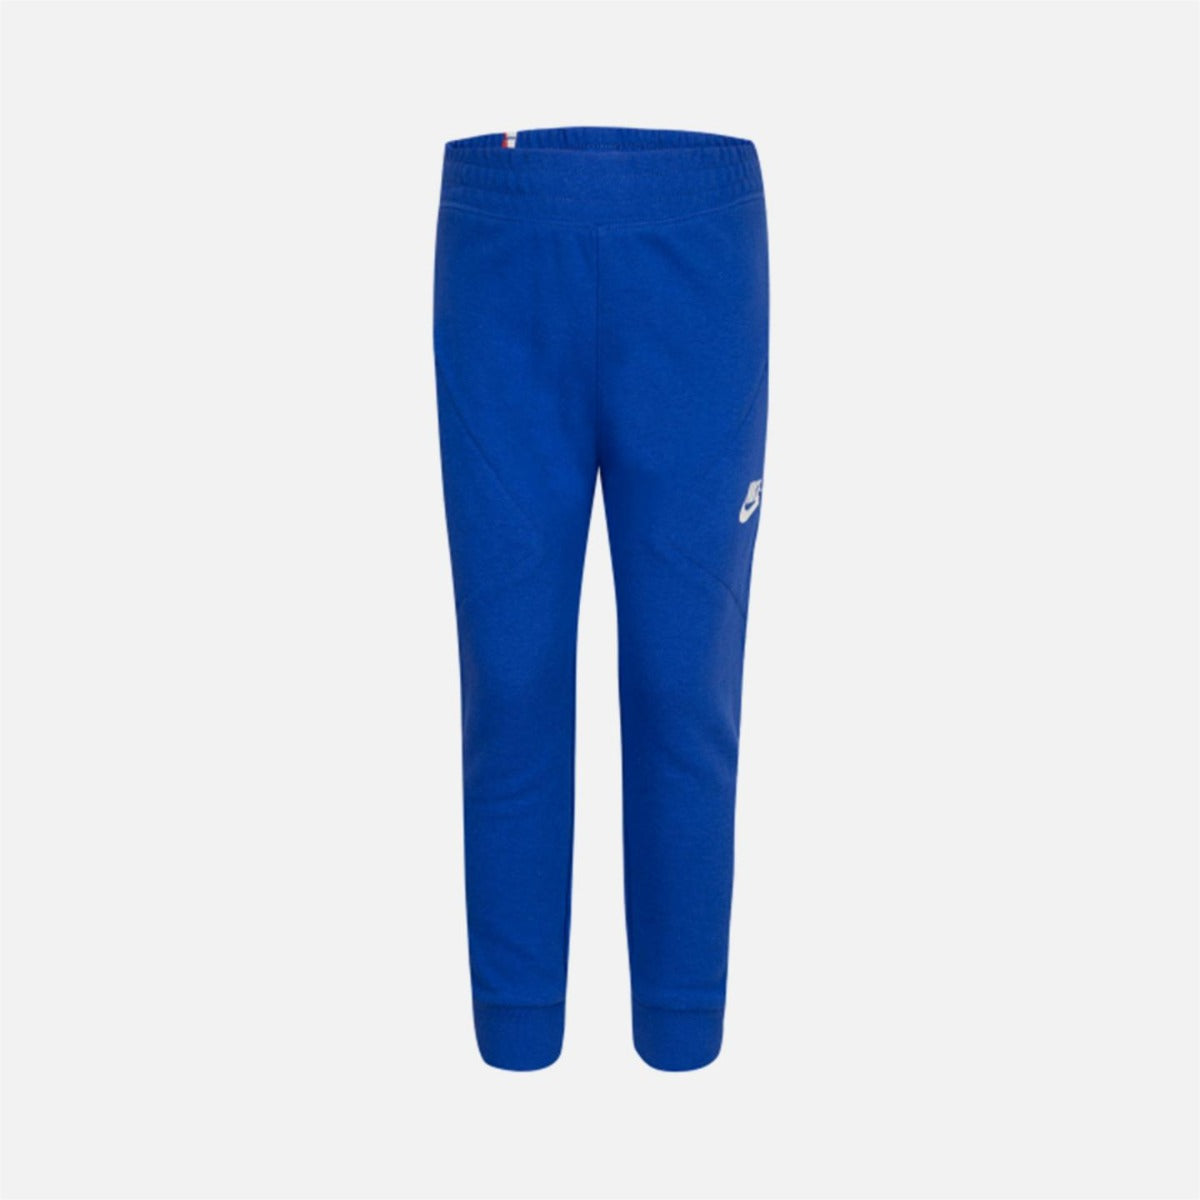 Nike Sportswear Hose Kinder – Blau